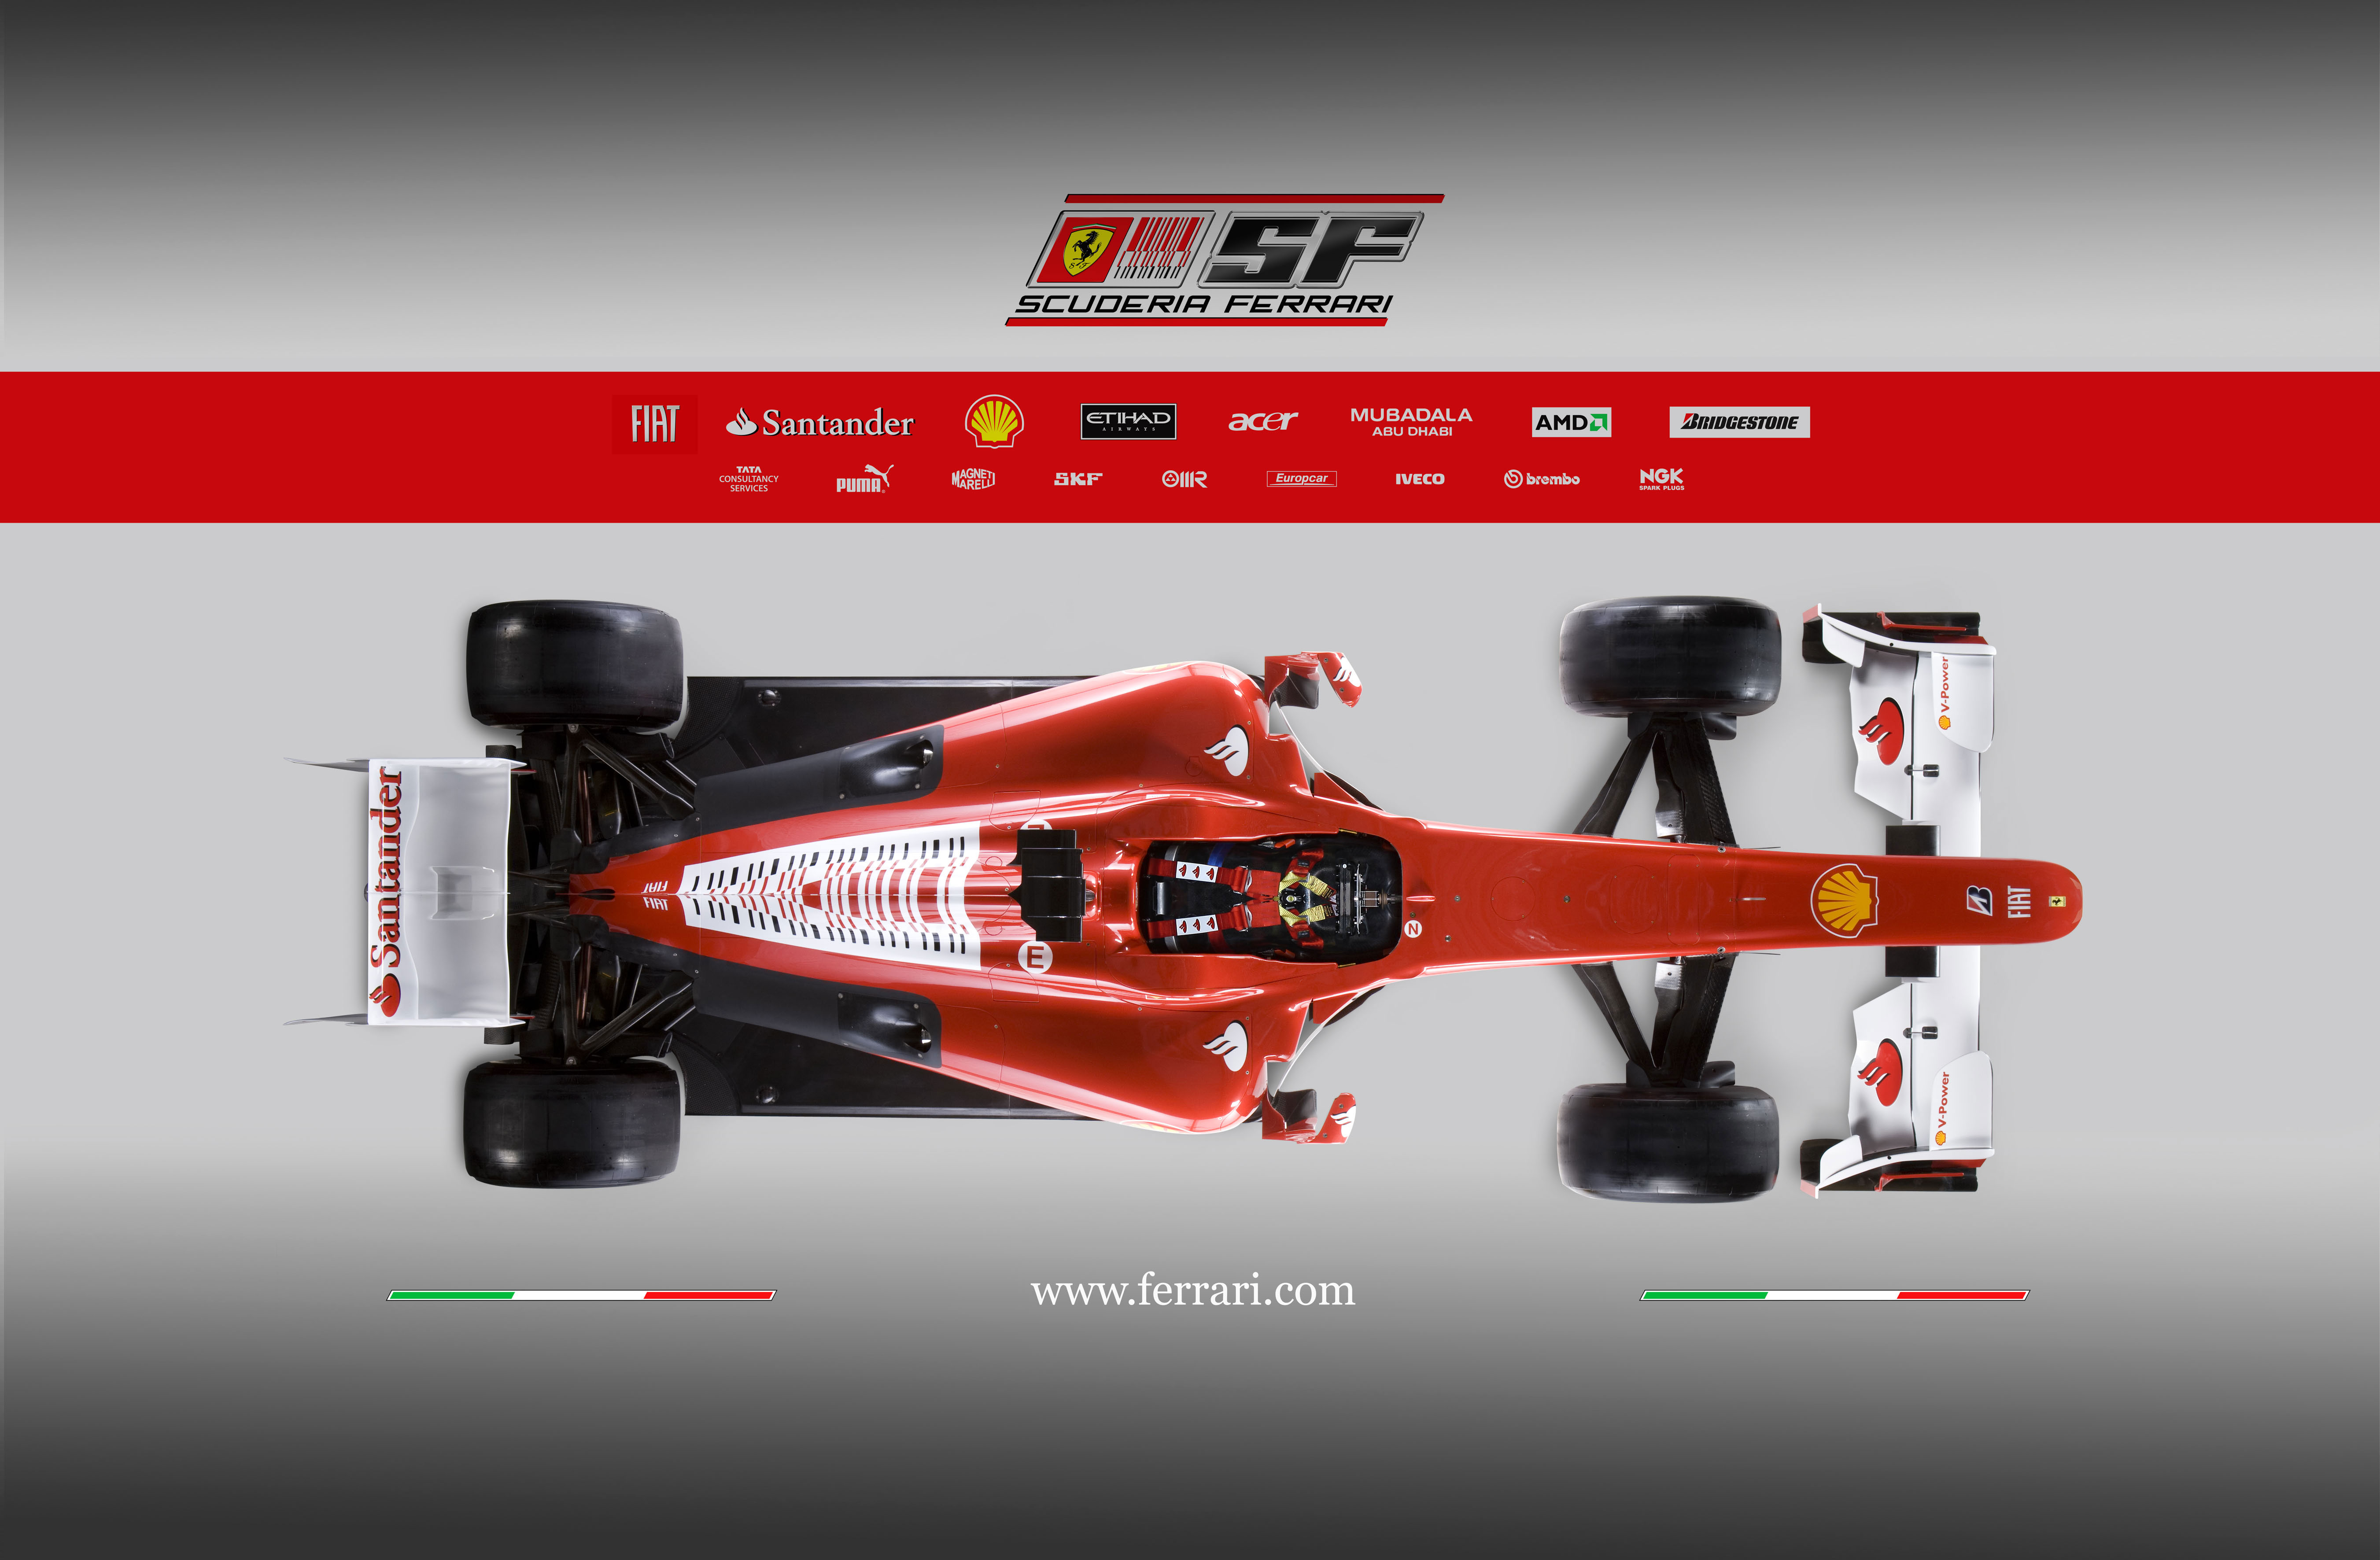 Ferrari F10 racing car in 4K Ultra HD, representing speed and excitement.